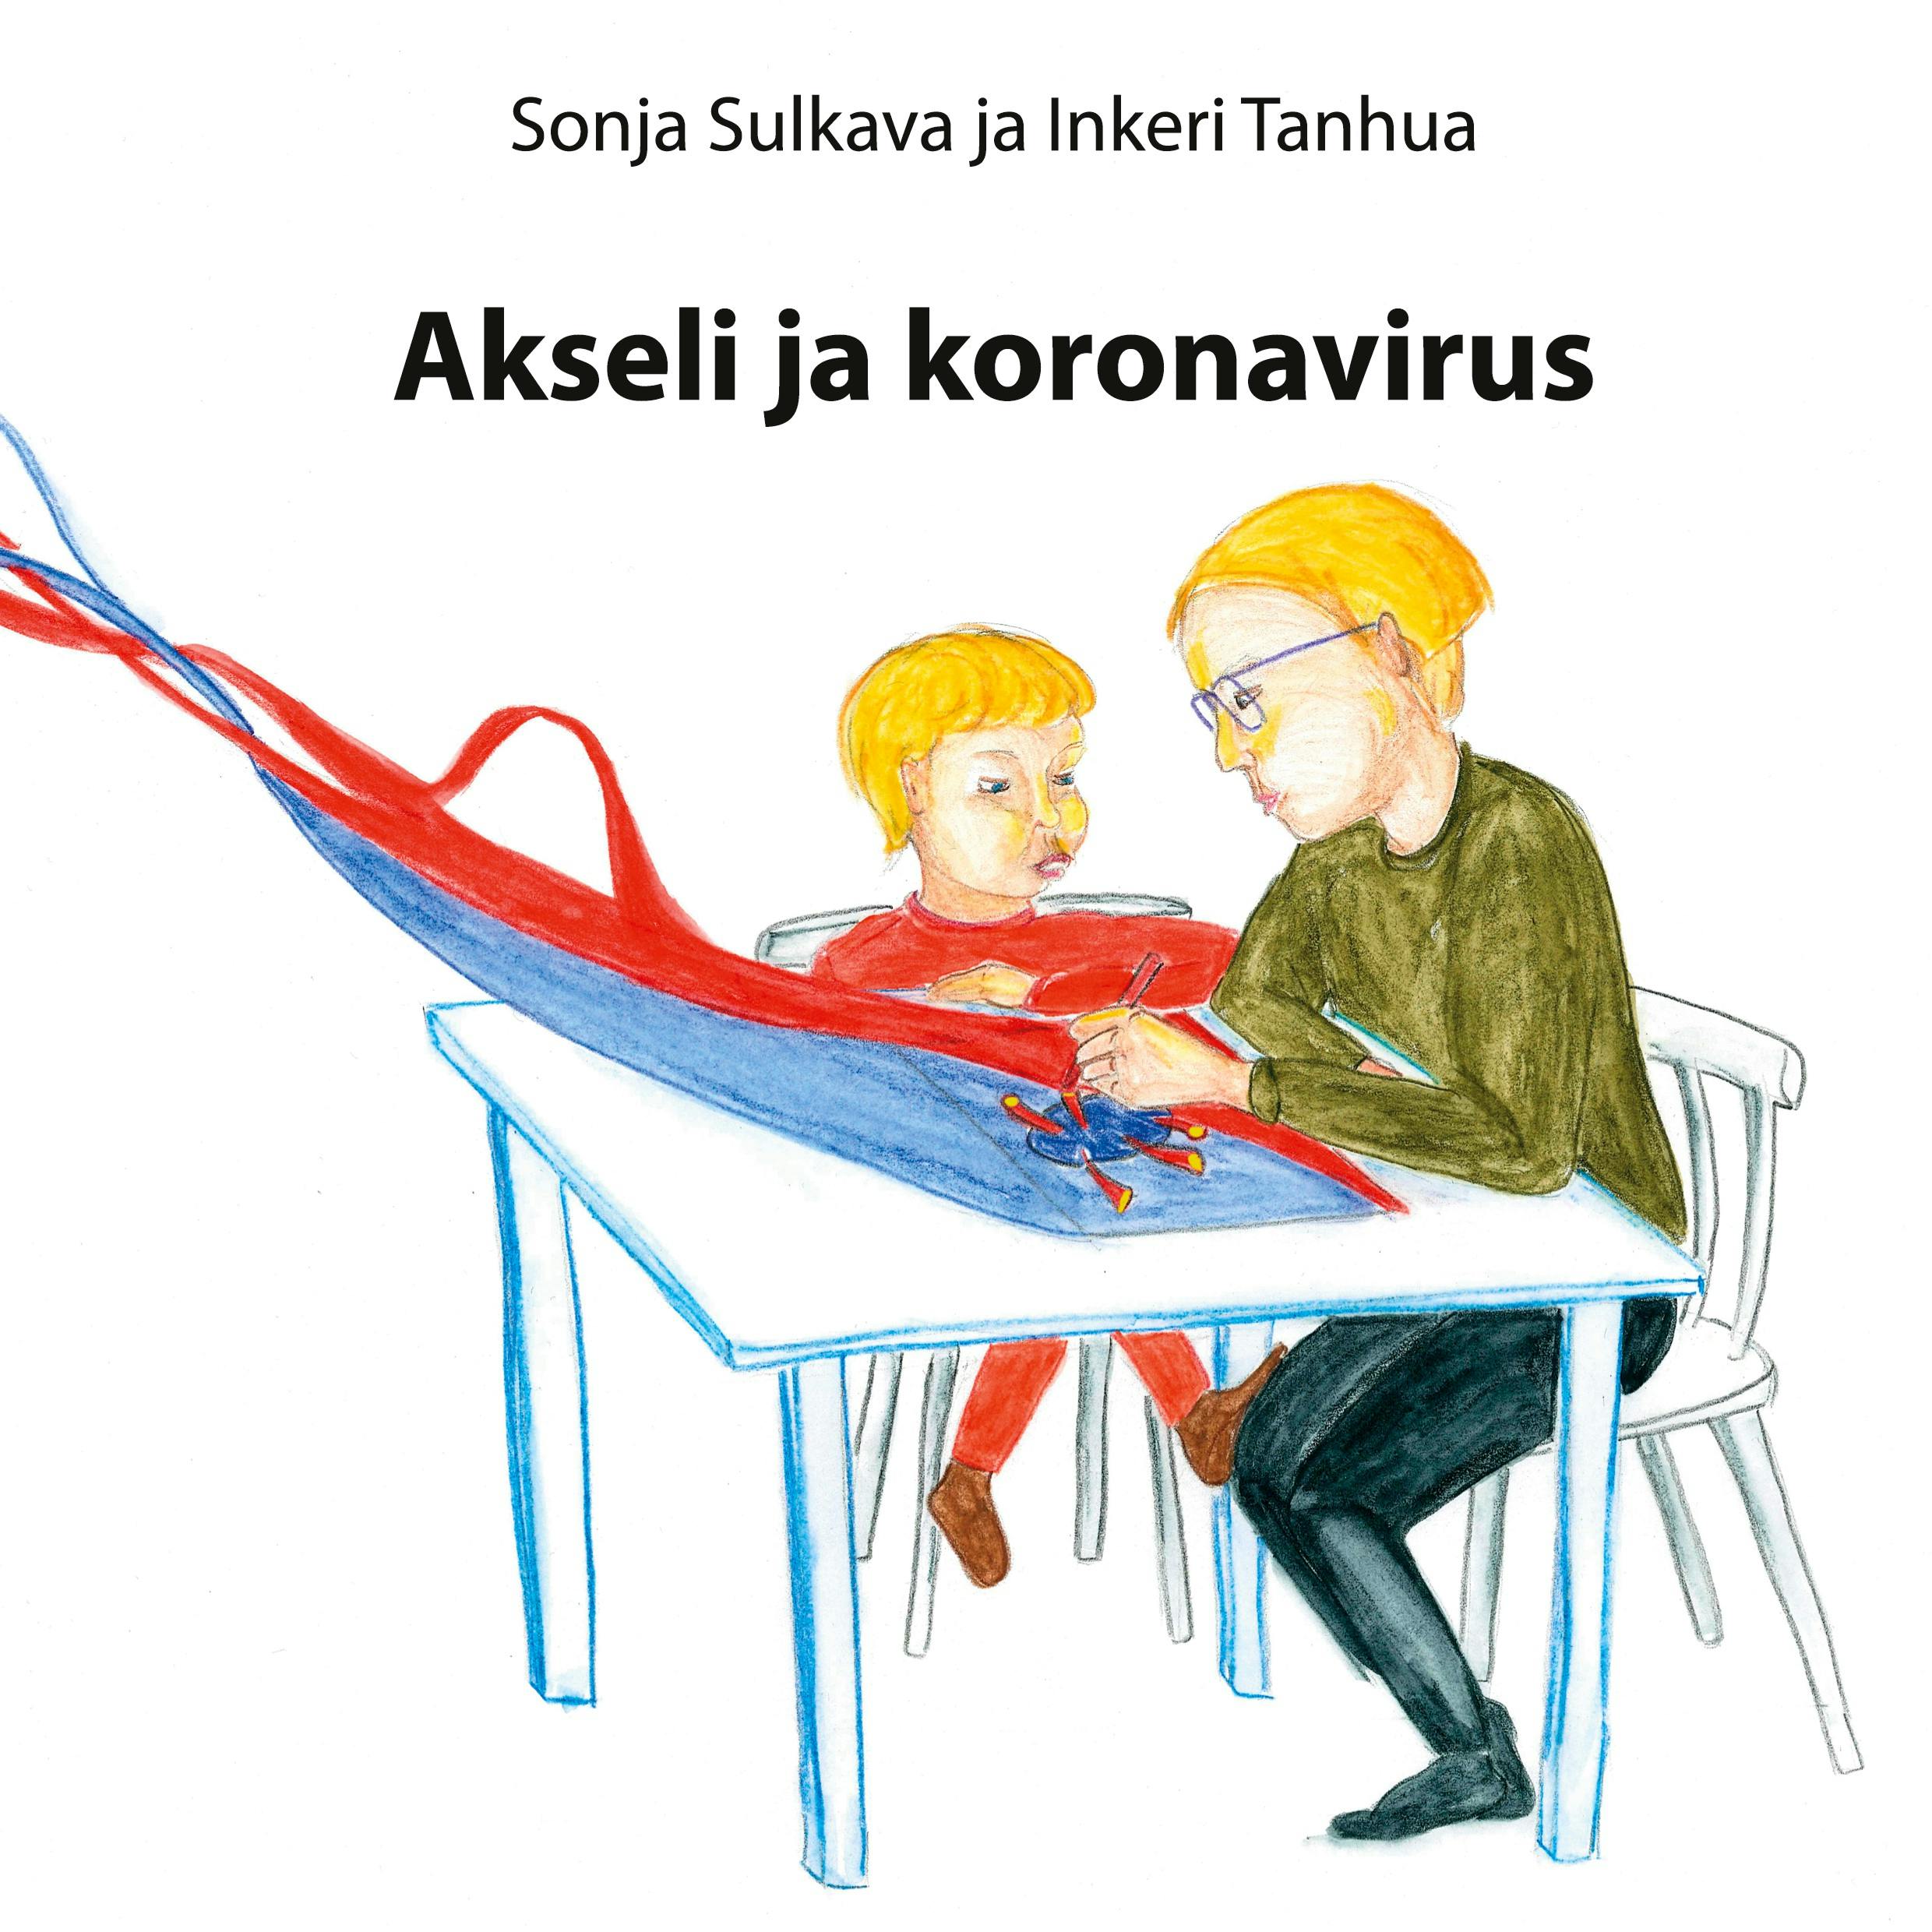 Akseli ja koronavirus - Sonja Sulkava, Inkeri Tanhua